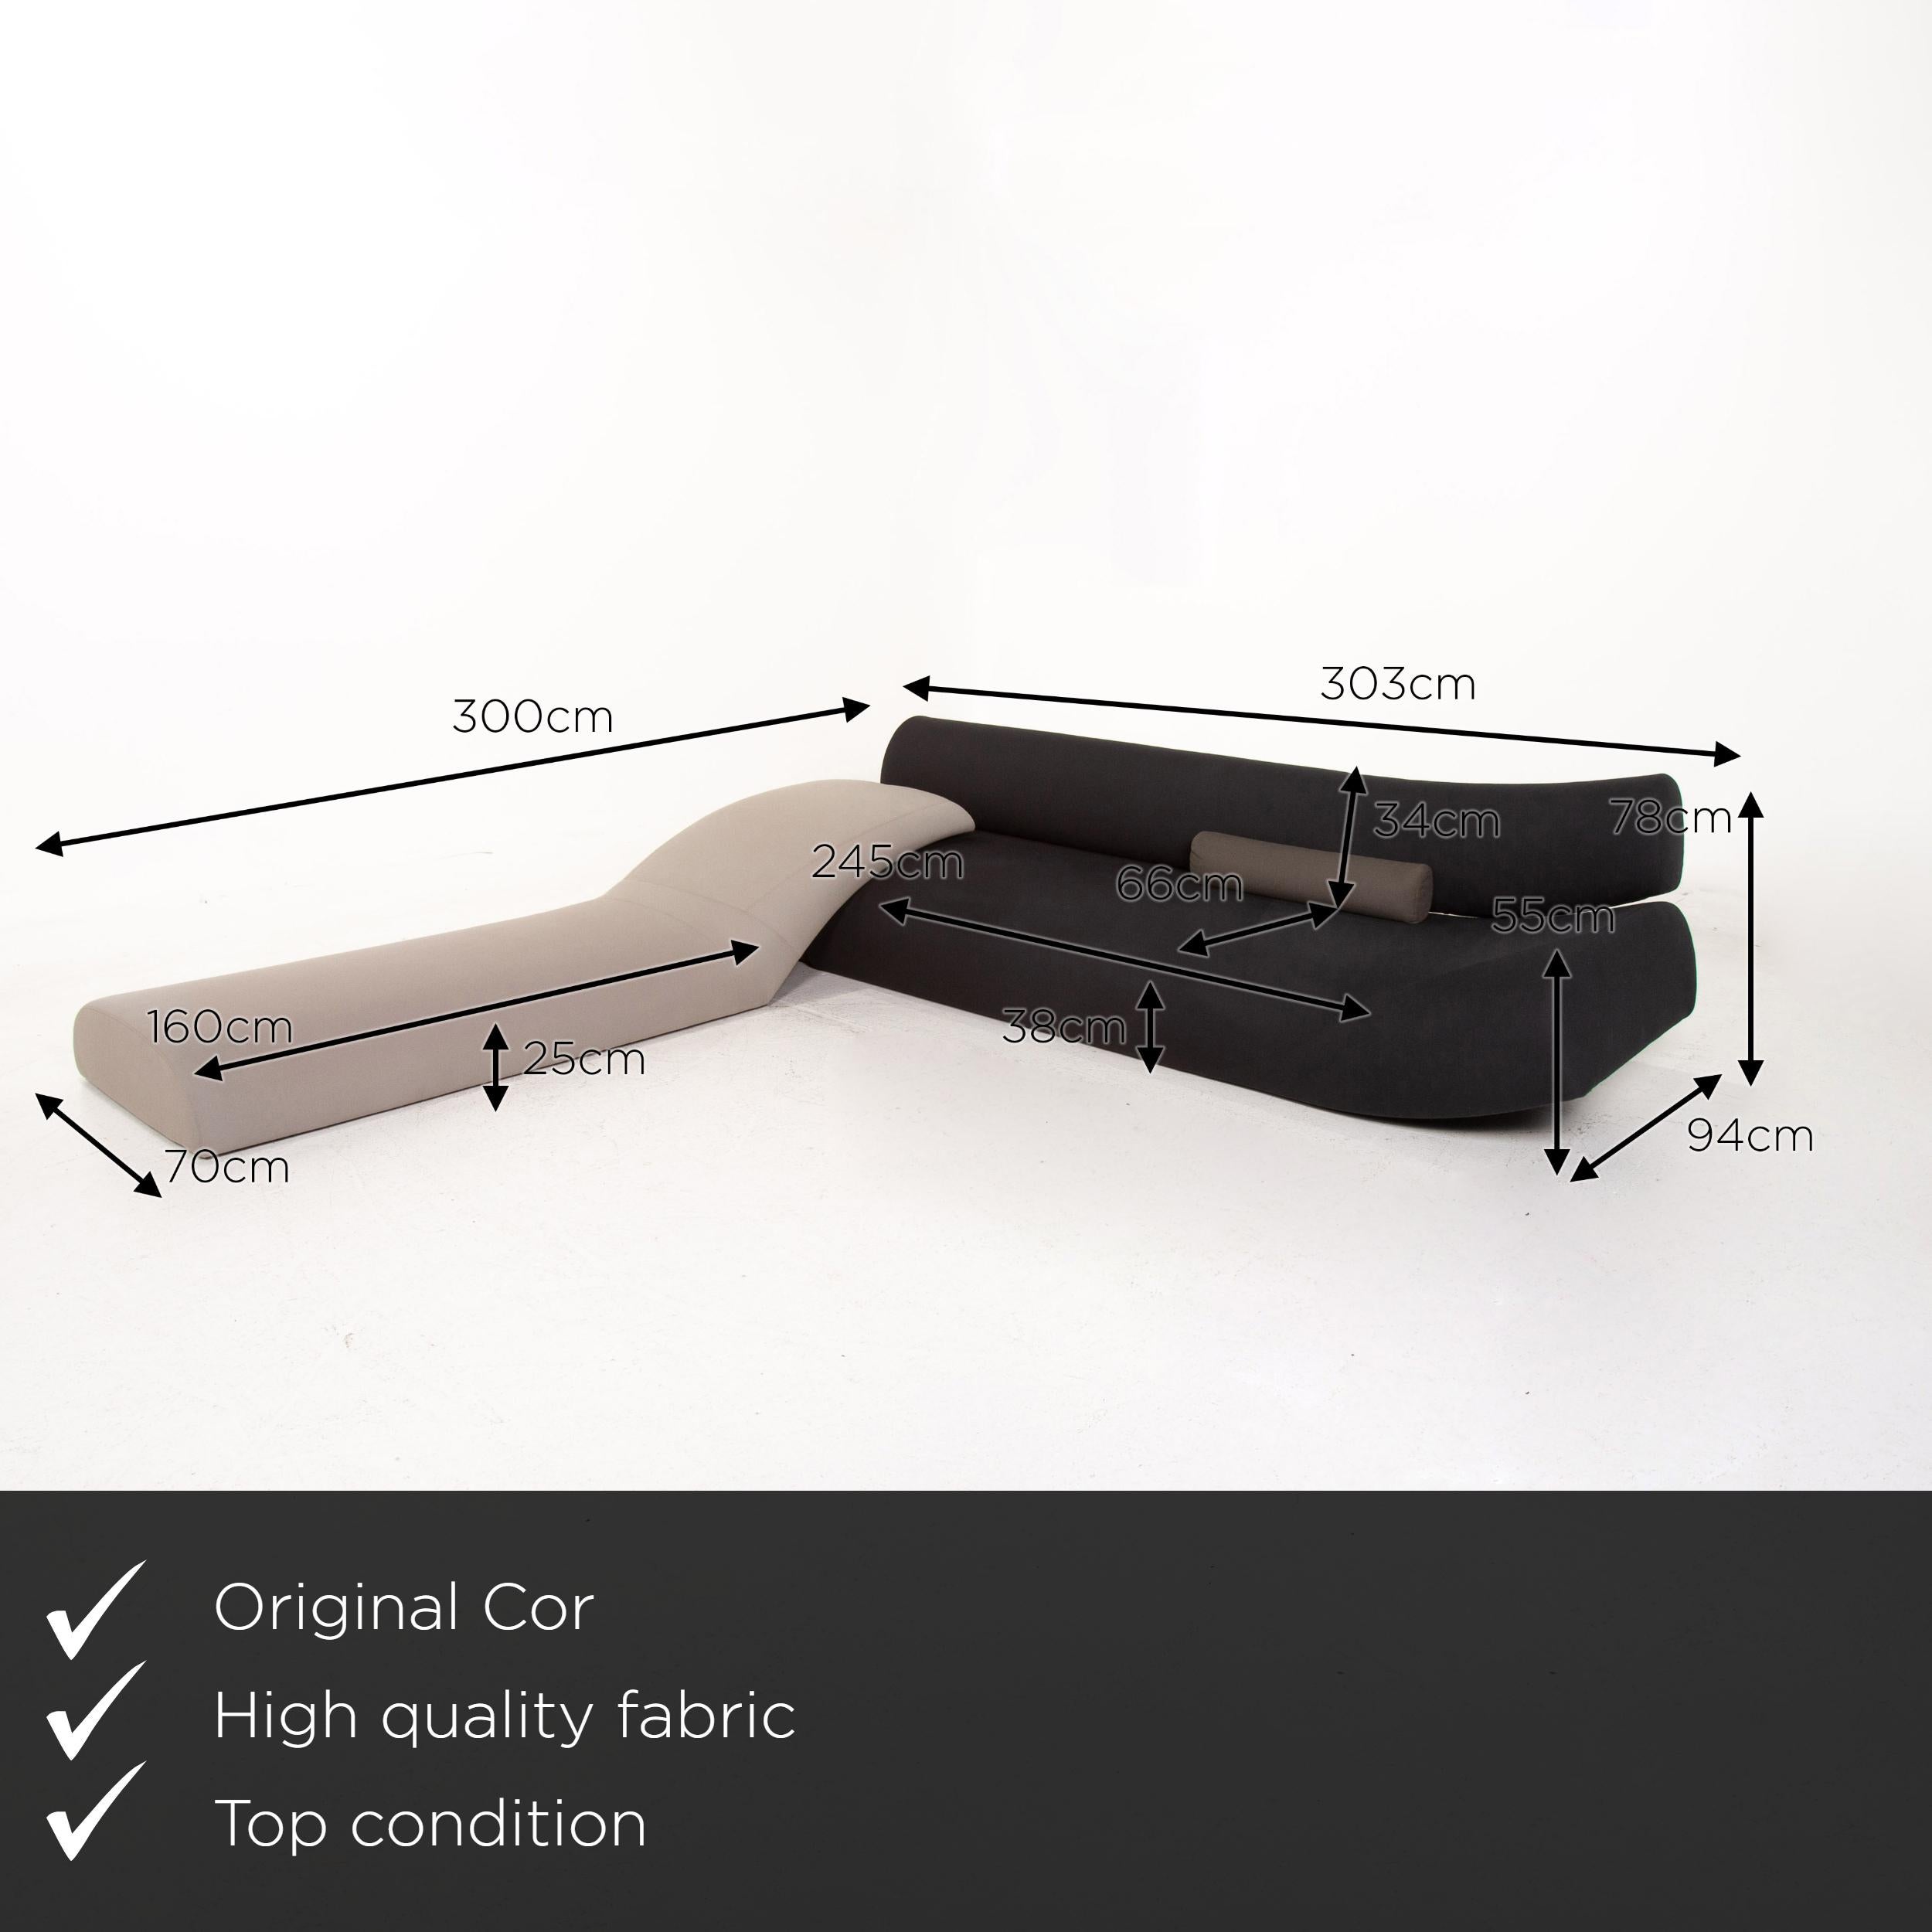 We present to you a COR lava fabric corner sofa black gray modular modular sofa sofa couch.
  
 

 Product measurements in centimeters:
 

Depth 70
Width 300
Height 75
Seat height 25
Rest height 55
Seat depth 160
Seat width 70
Back